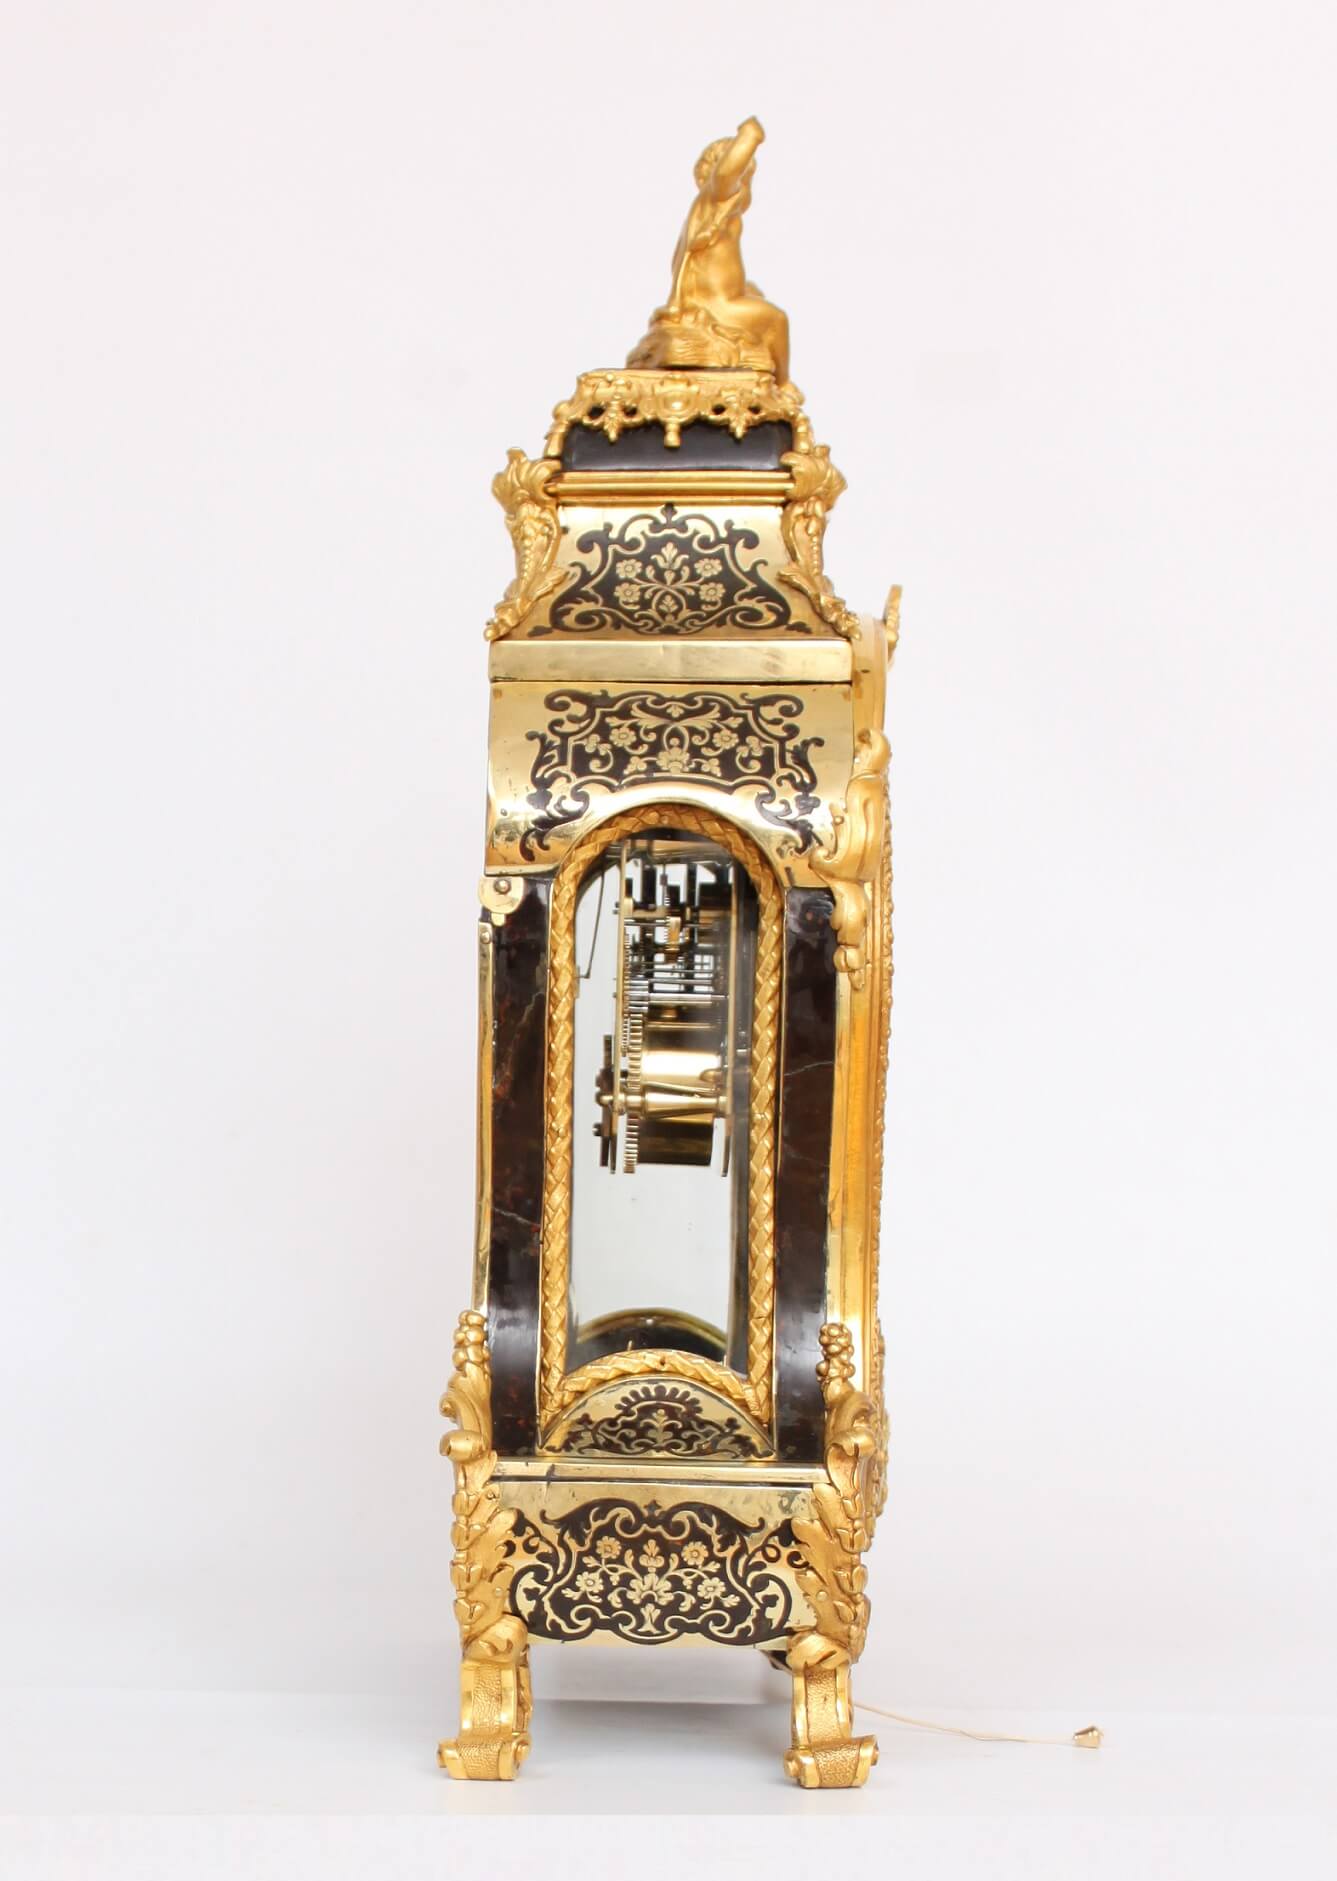 French-antique clock-Regence-Boulle-Delorme-quarter repeat-console-bracket clock